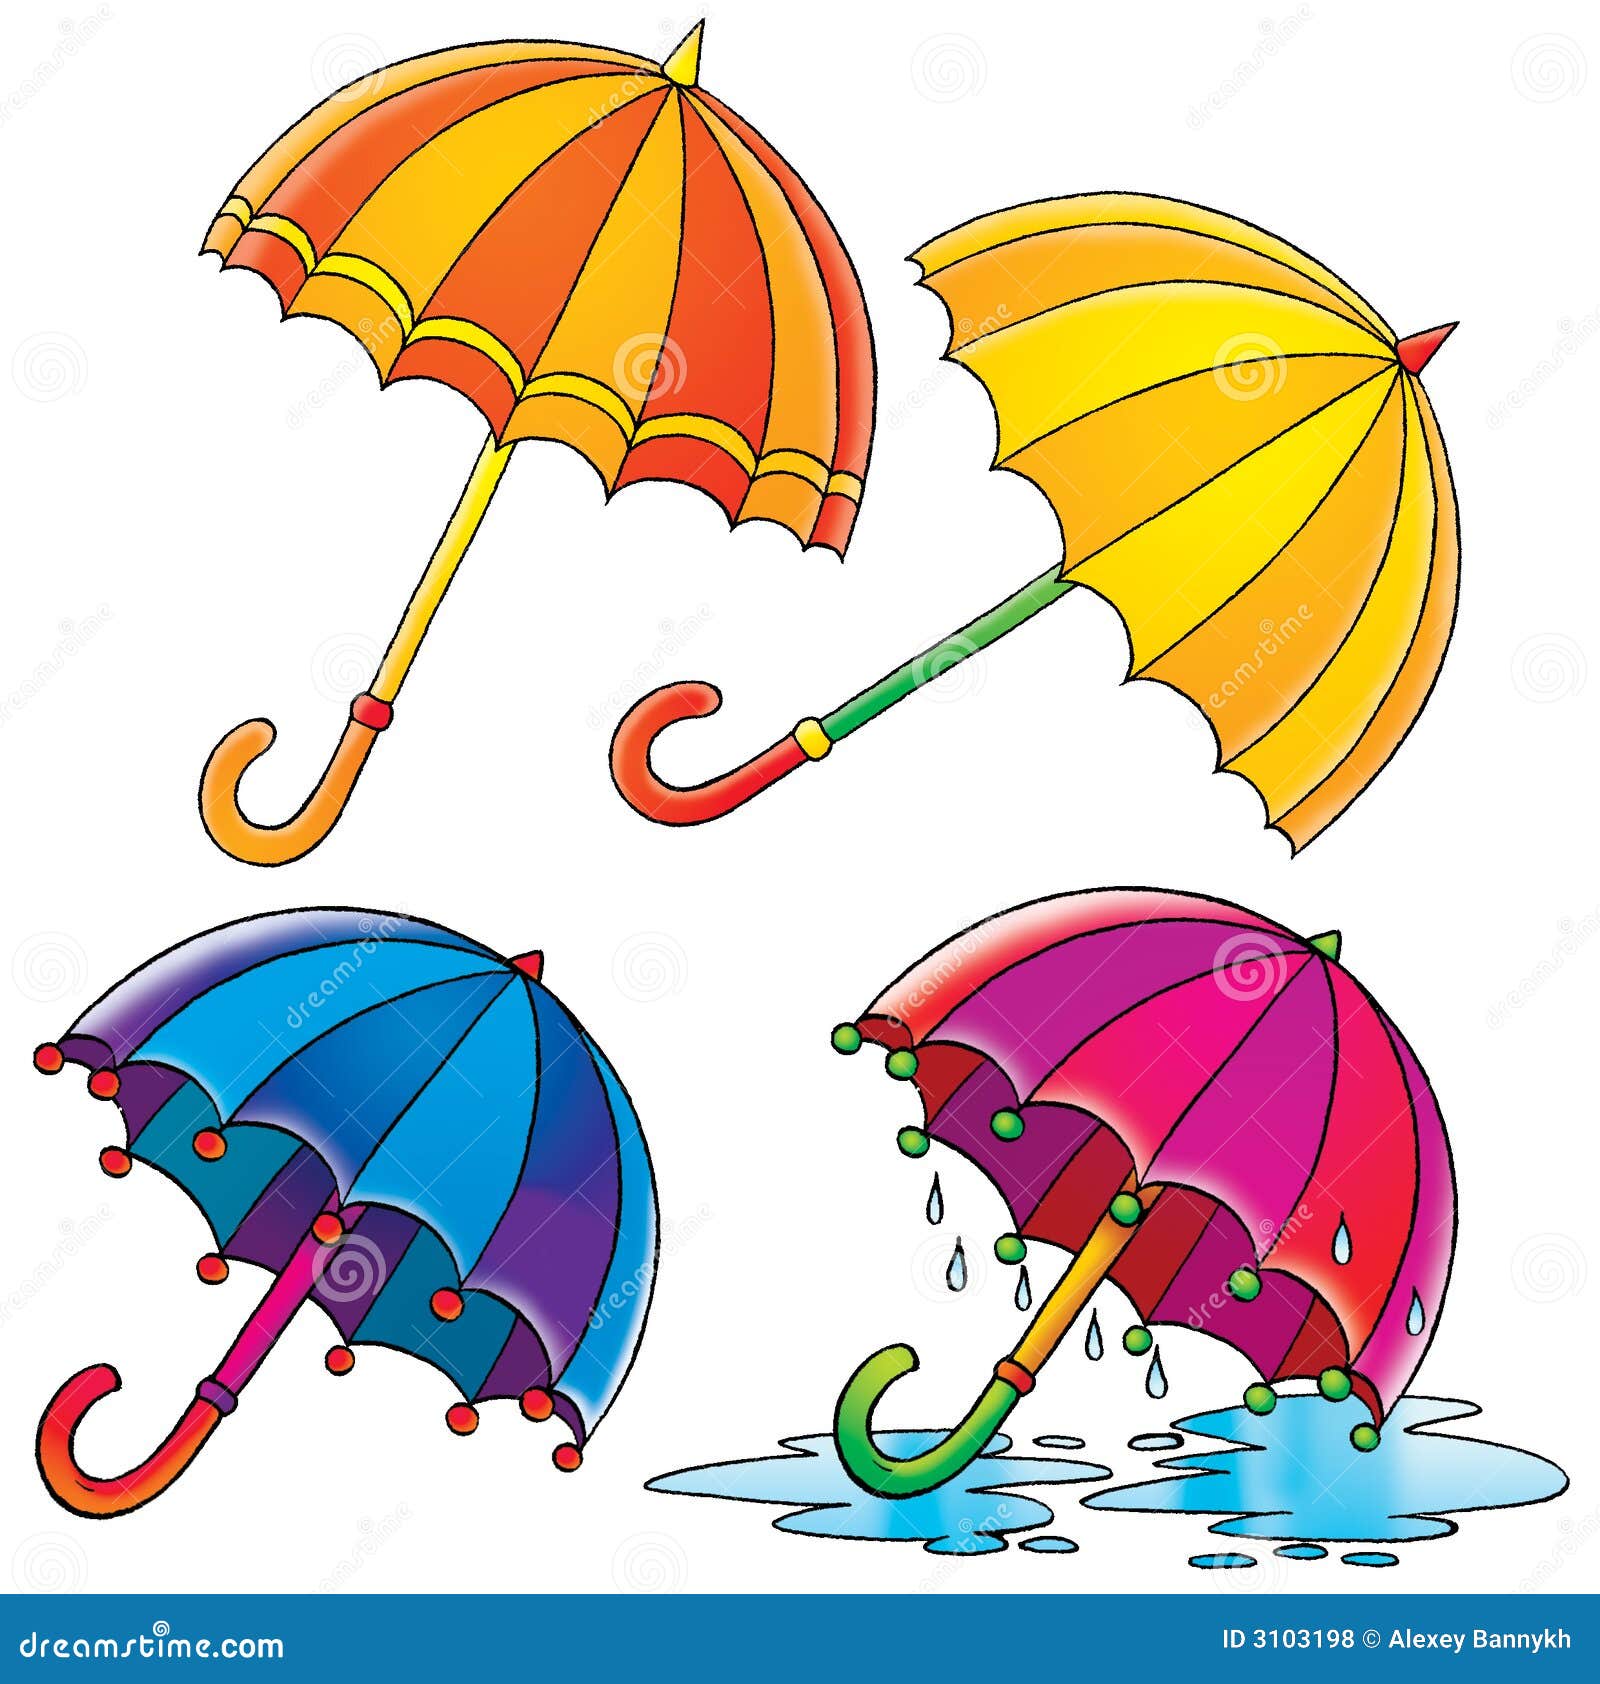 umbrella animated clip art - photo #43